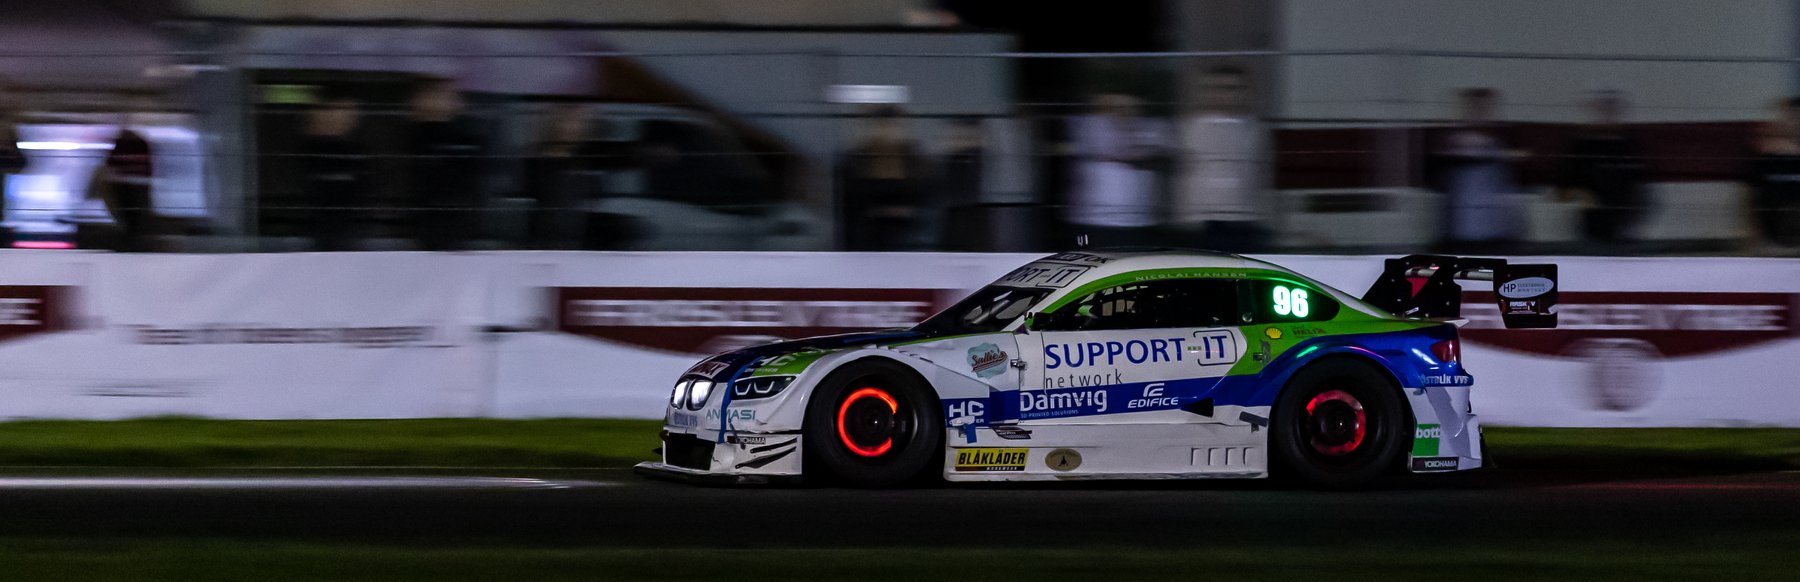 Motorsport-Sponsoring-02.jpg